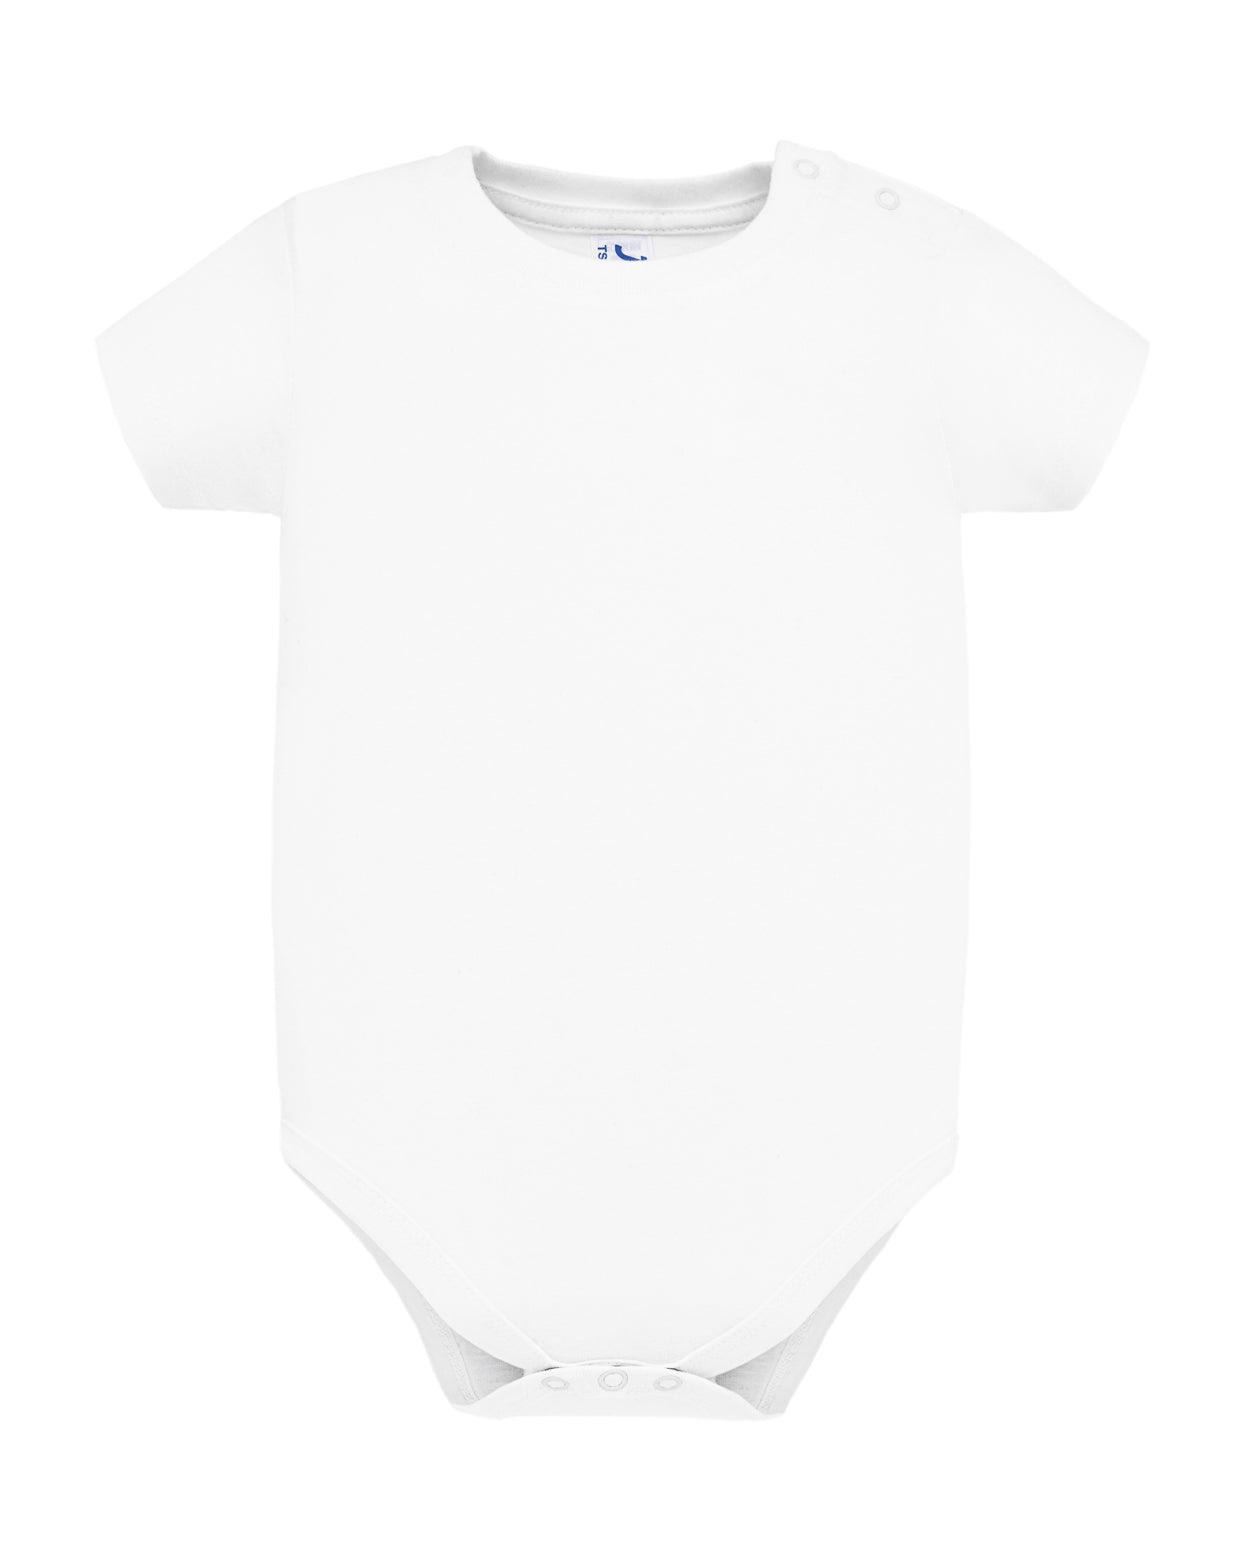 Single Jersey Unisex Baby Body - Lunar Boutique